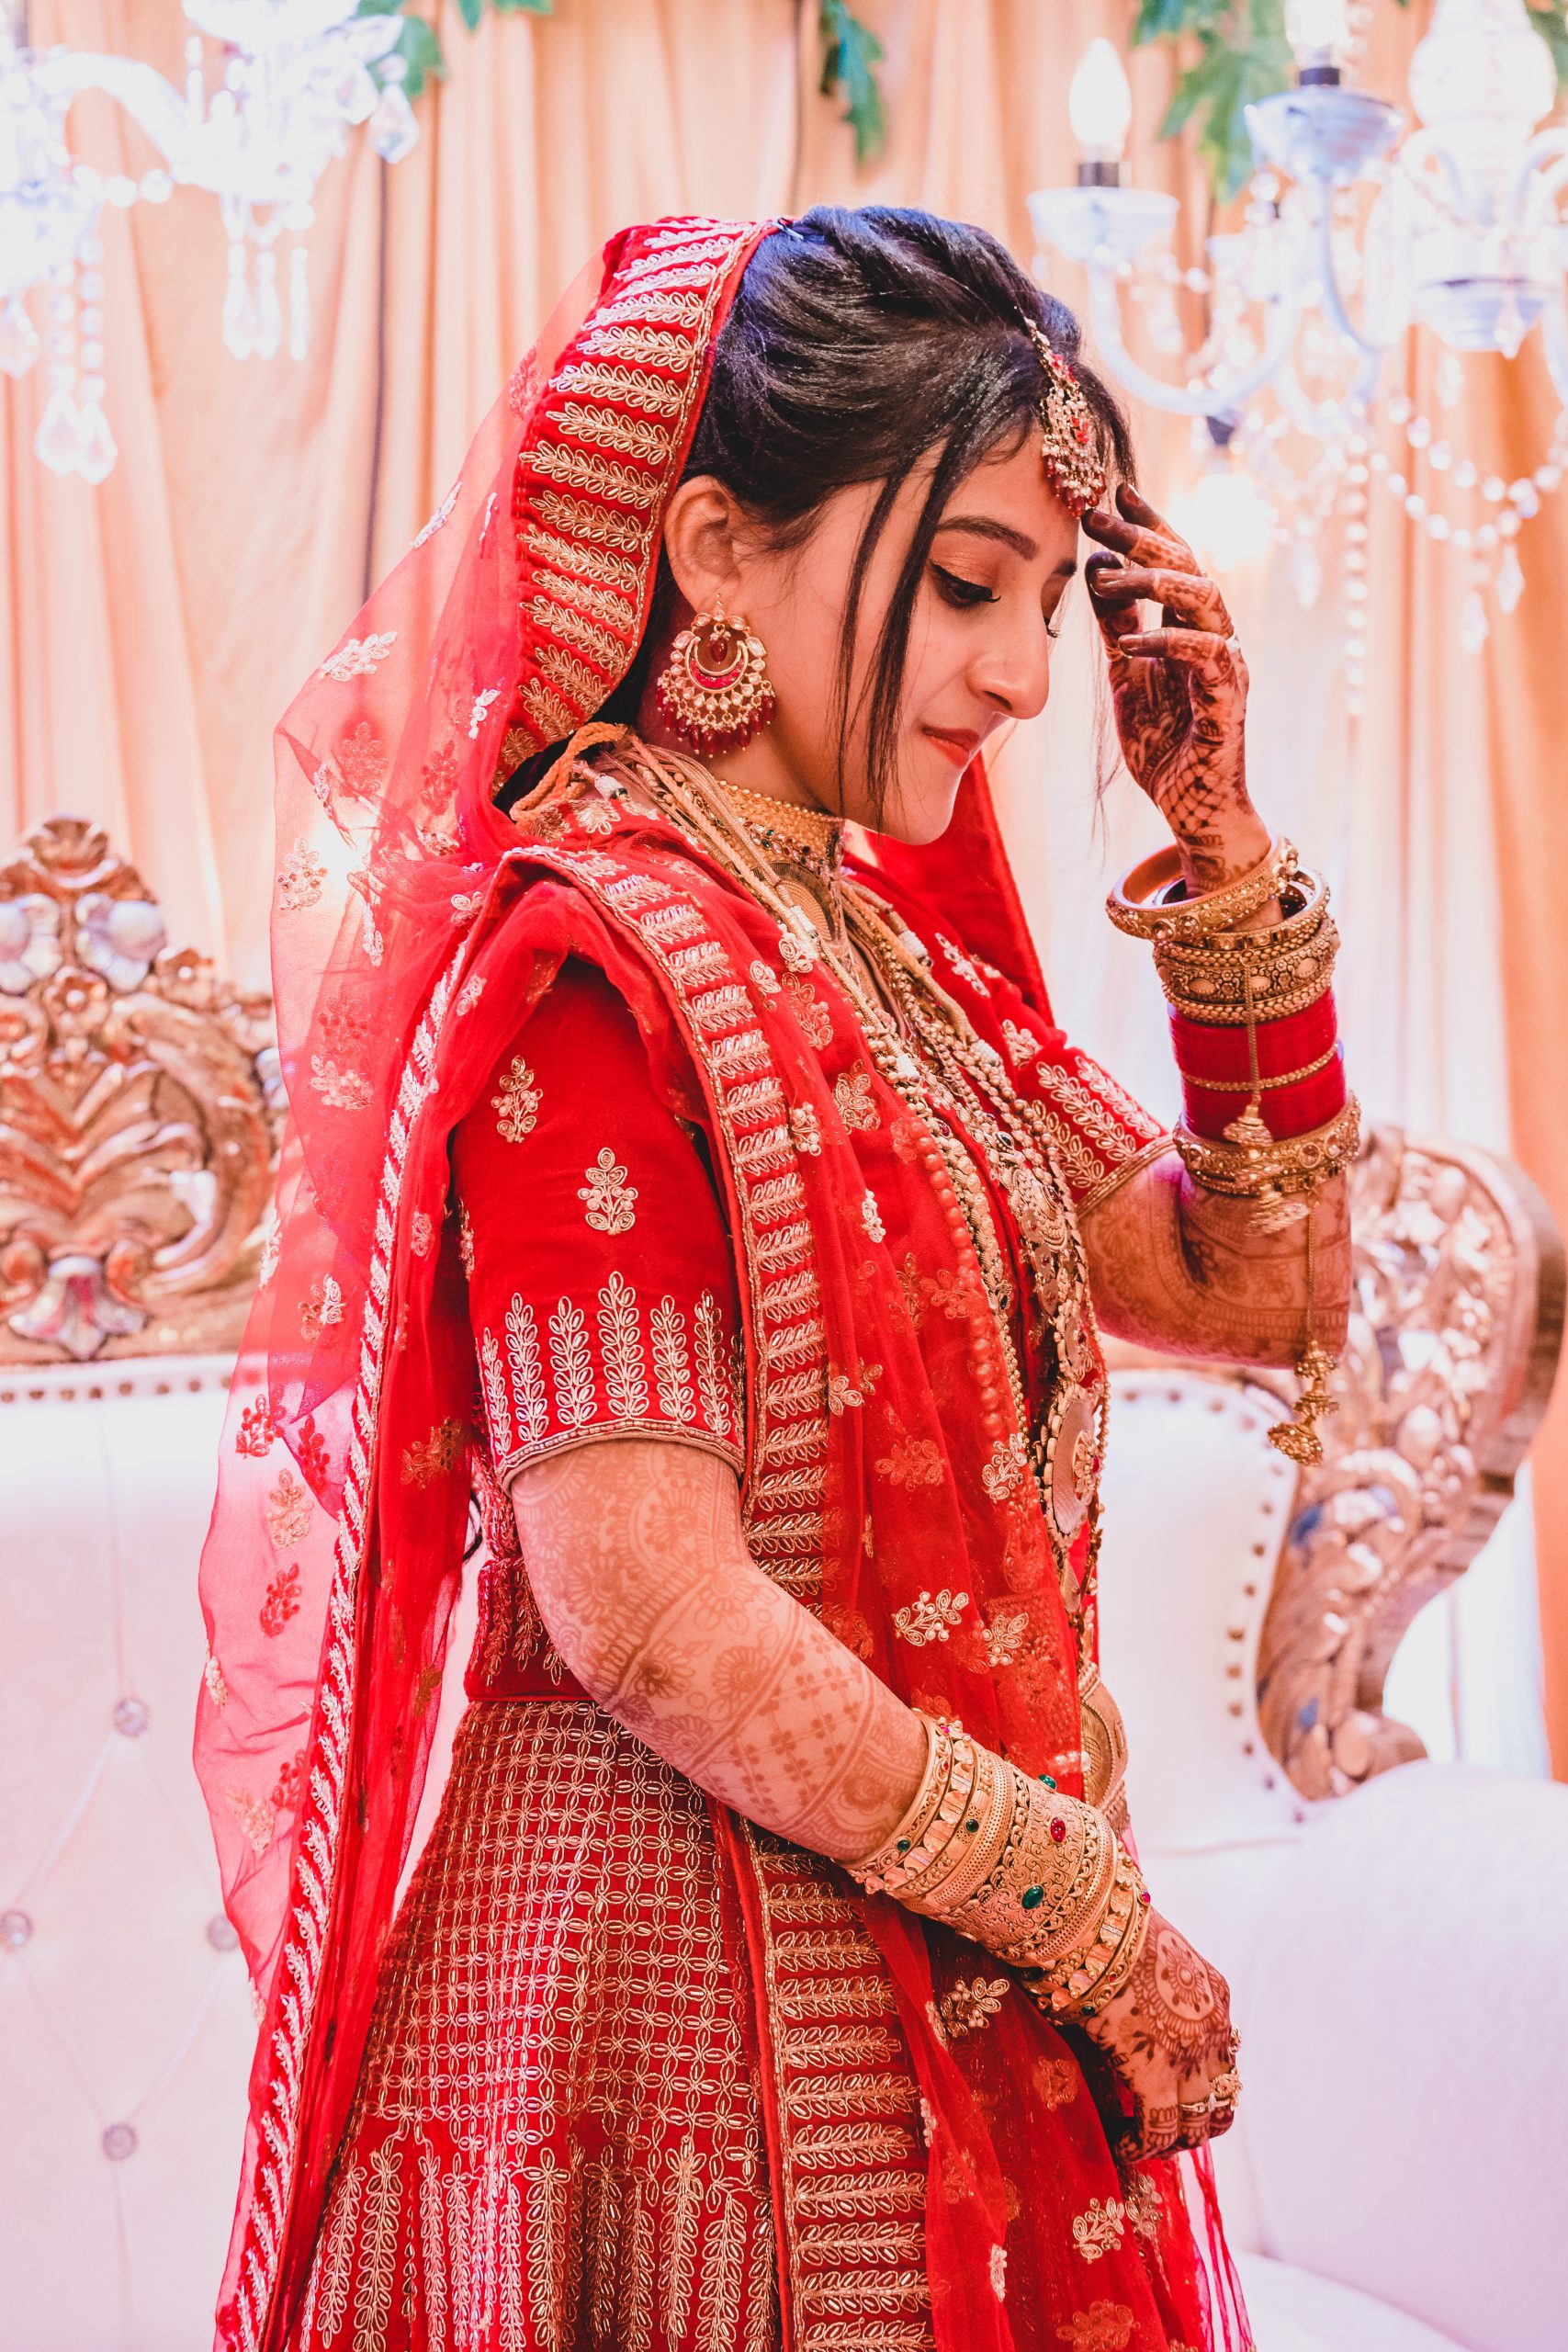 An Indian bride